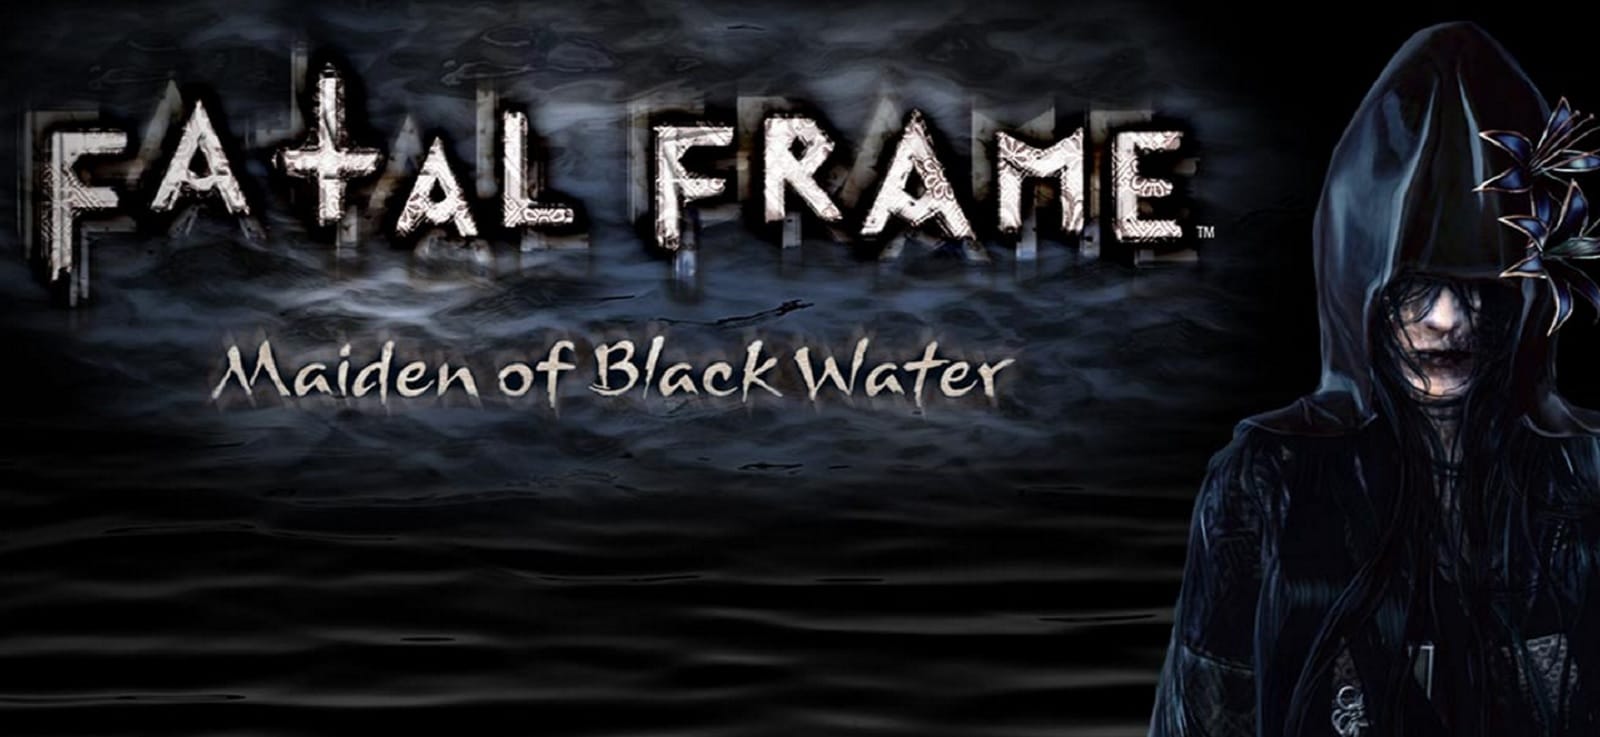 download free maiden of black water wii u